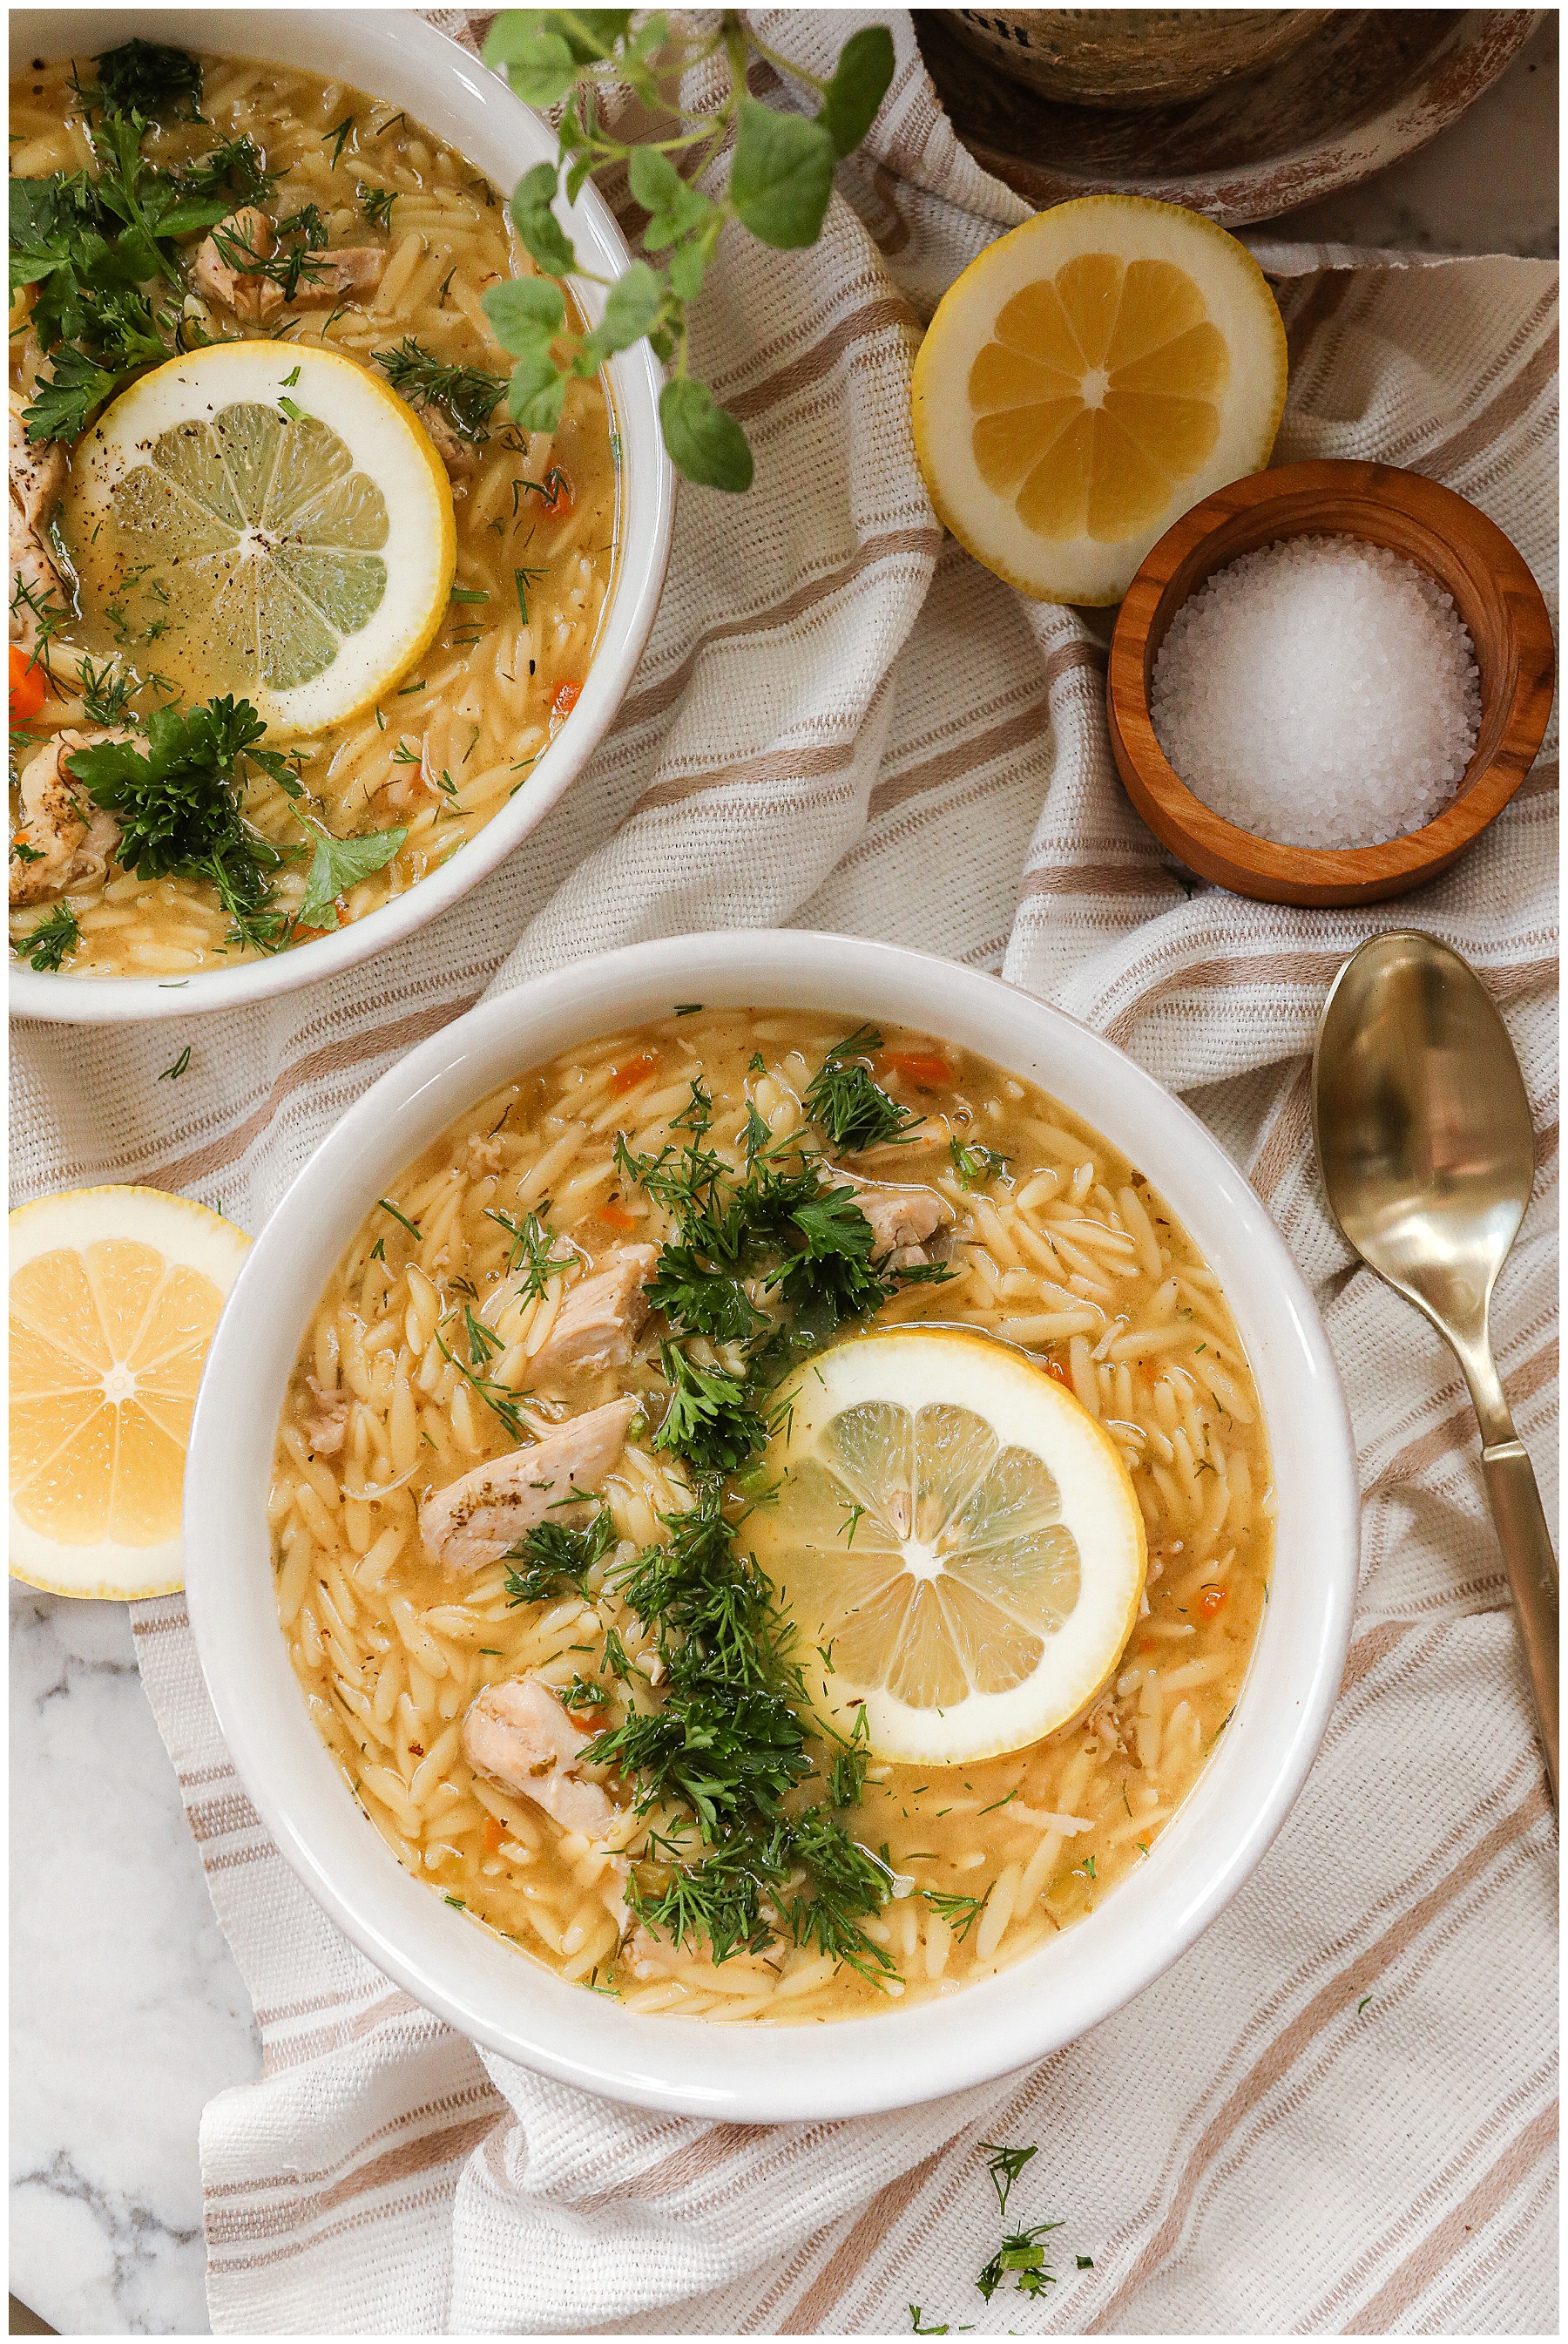 Lemon Chicken Orzo Soup Recipe